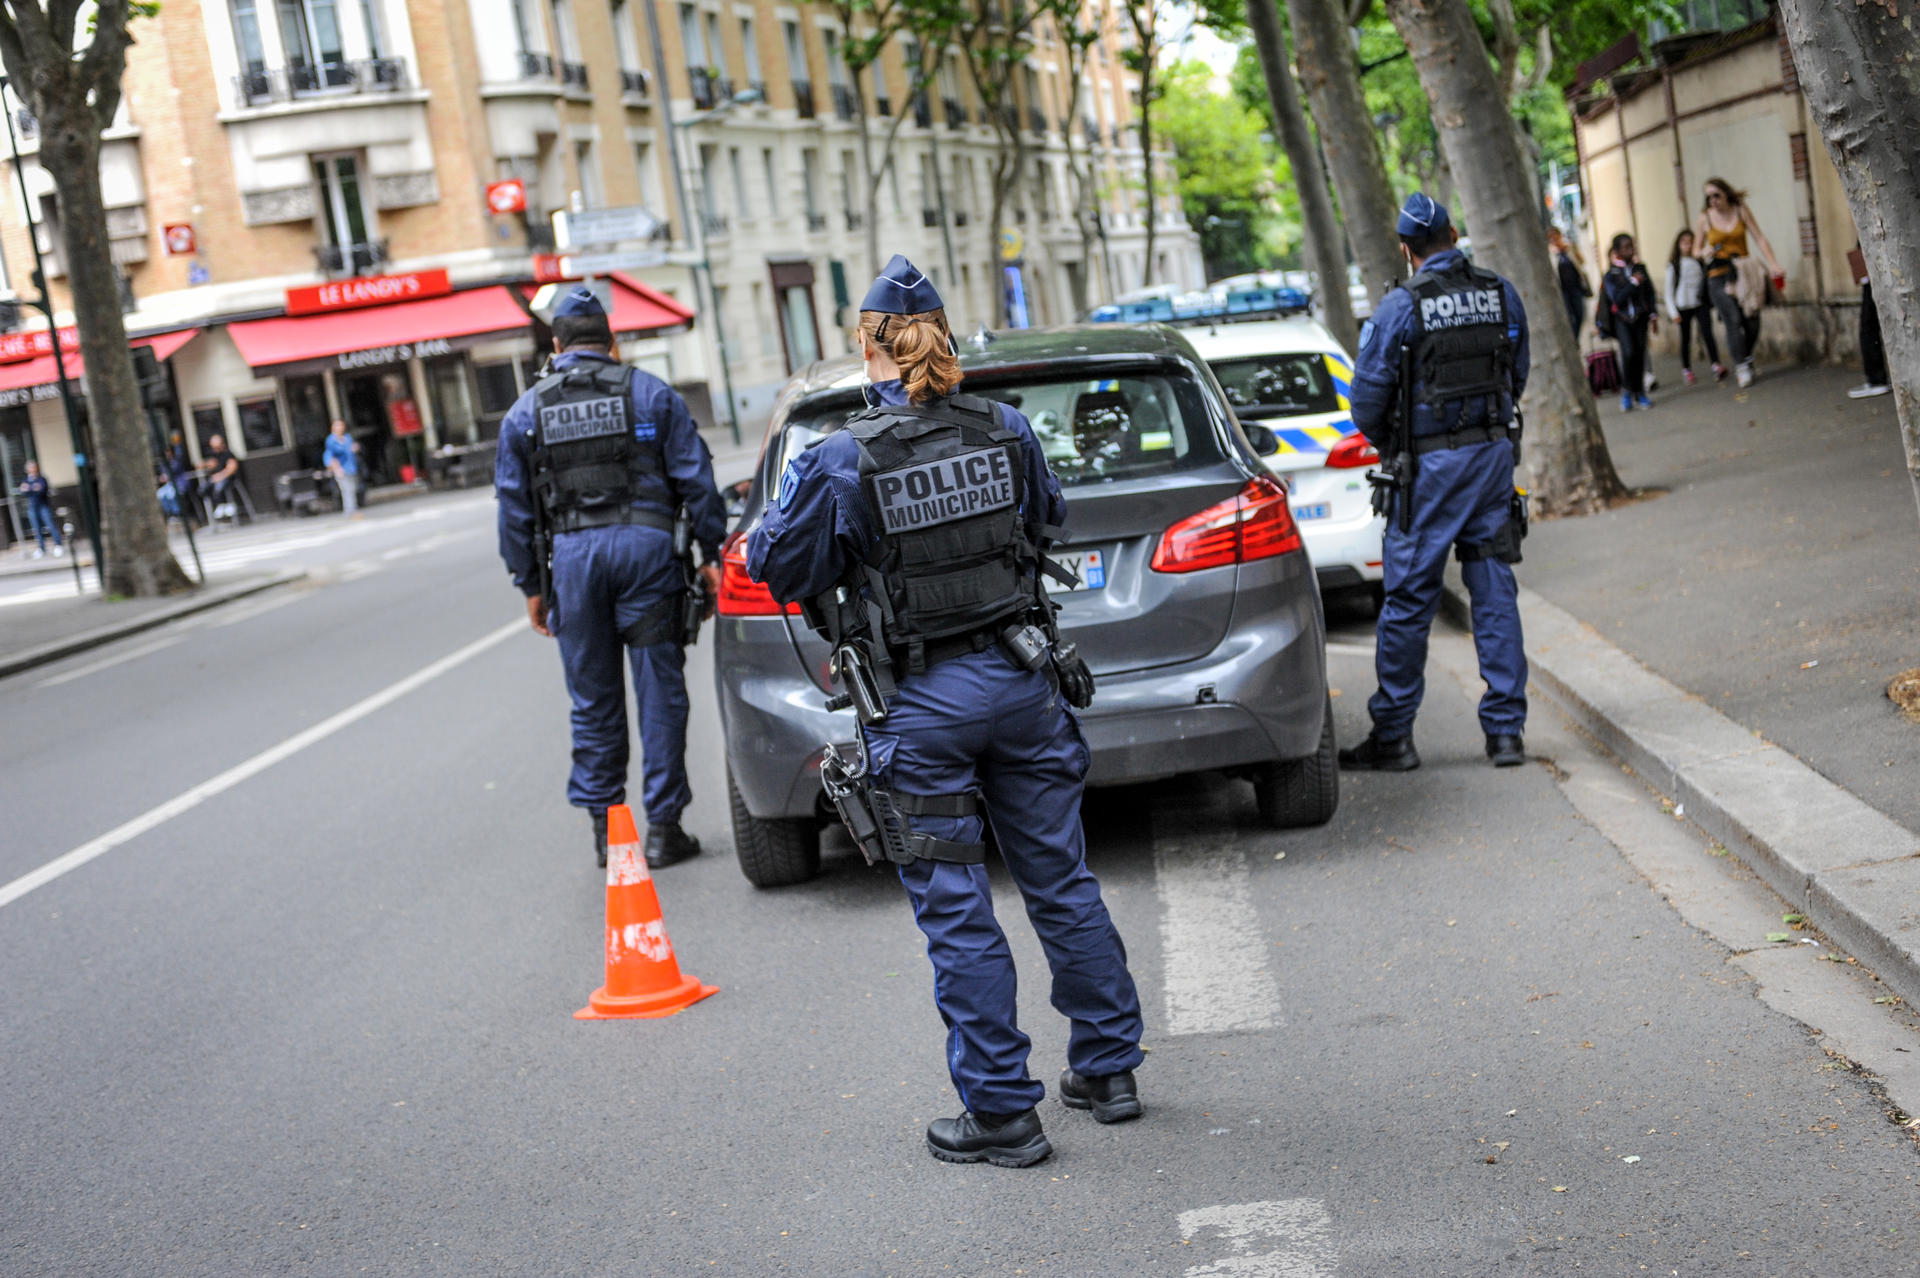 http://www.ville-clichy.fr/uploads/Image/57/58062_235_police-municipale.jpg